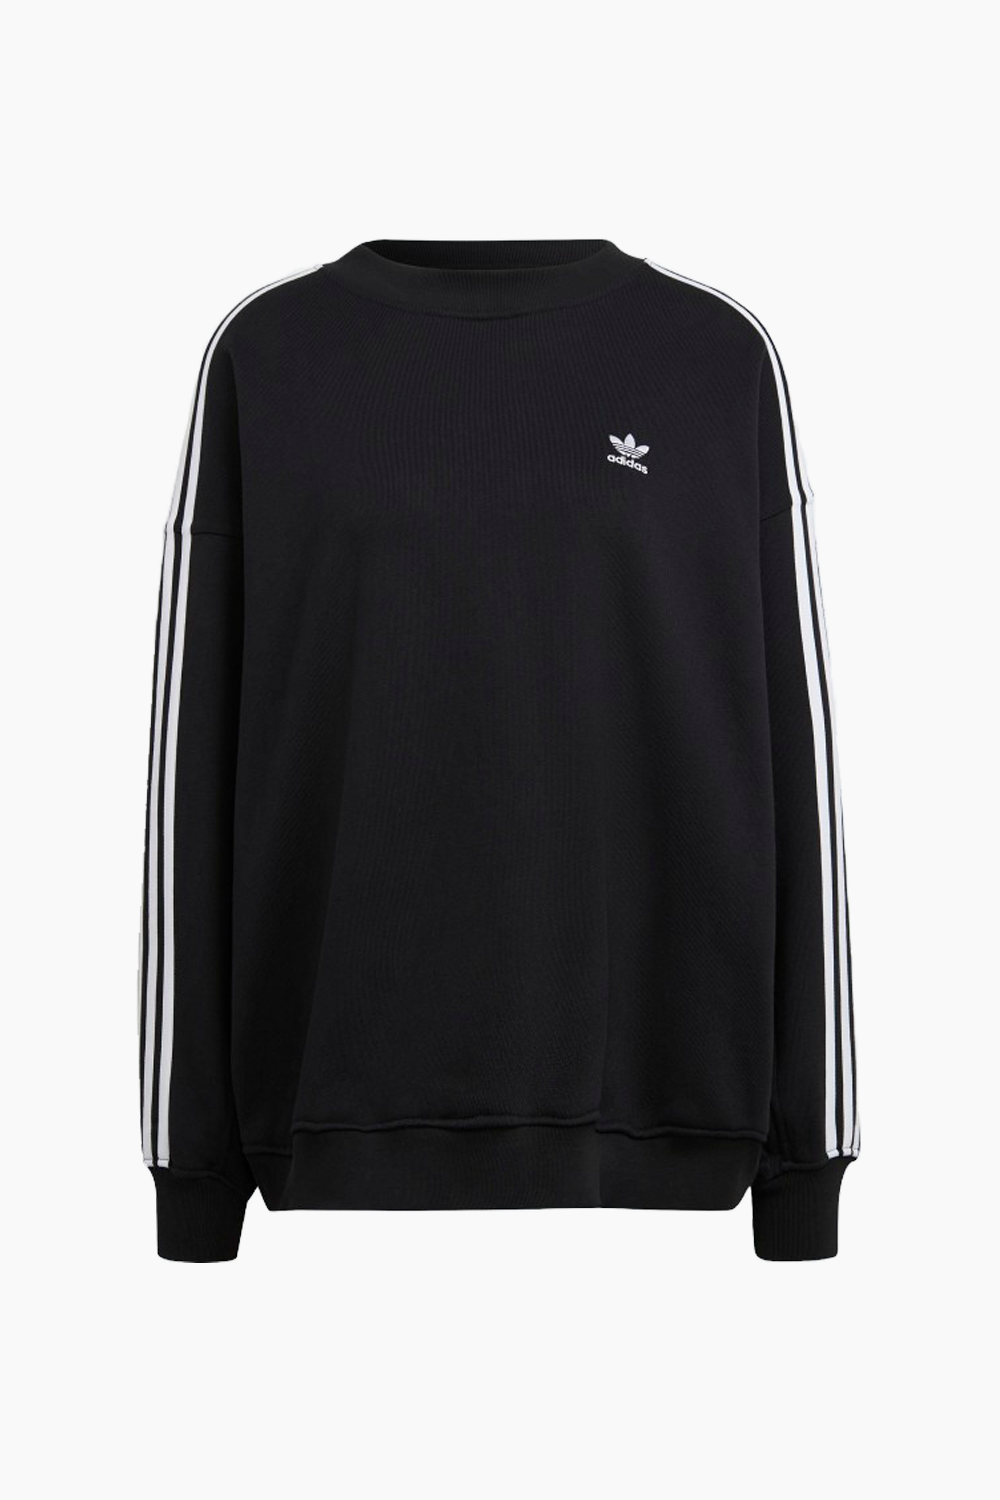 OS Sweatshirt - Black - Adidas Originals